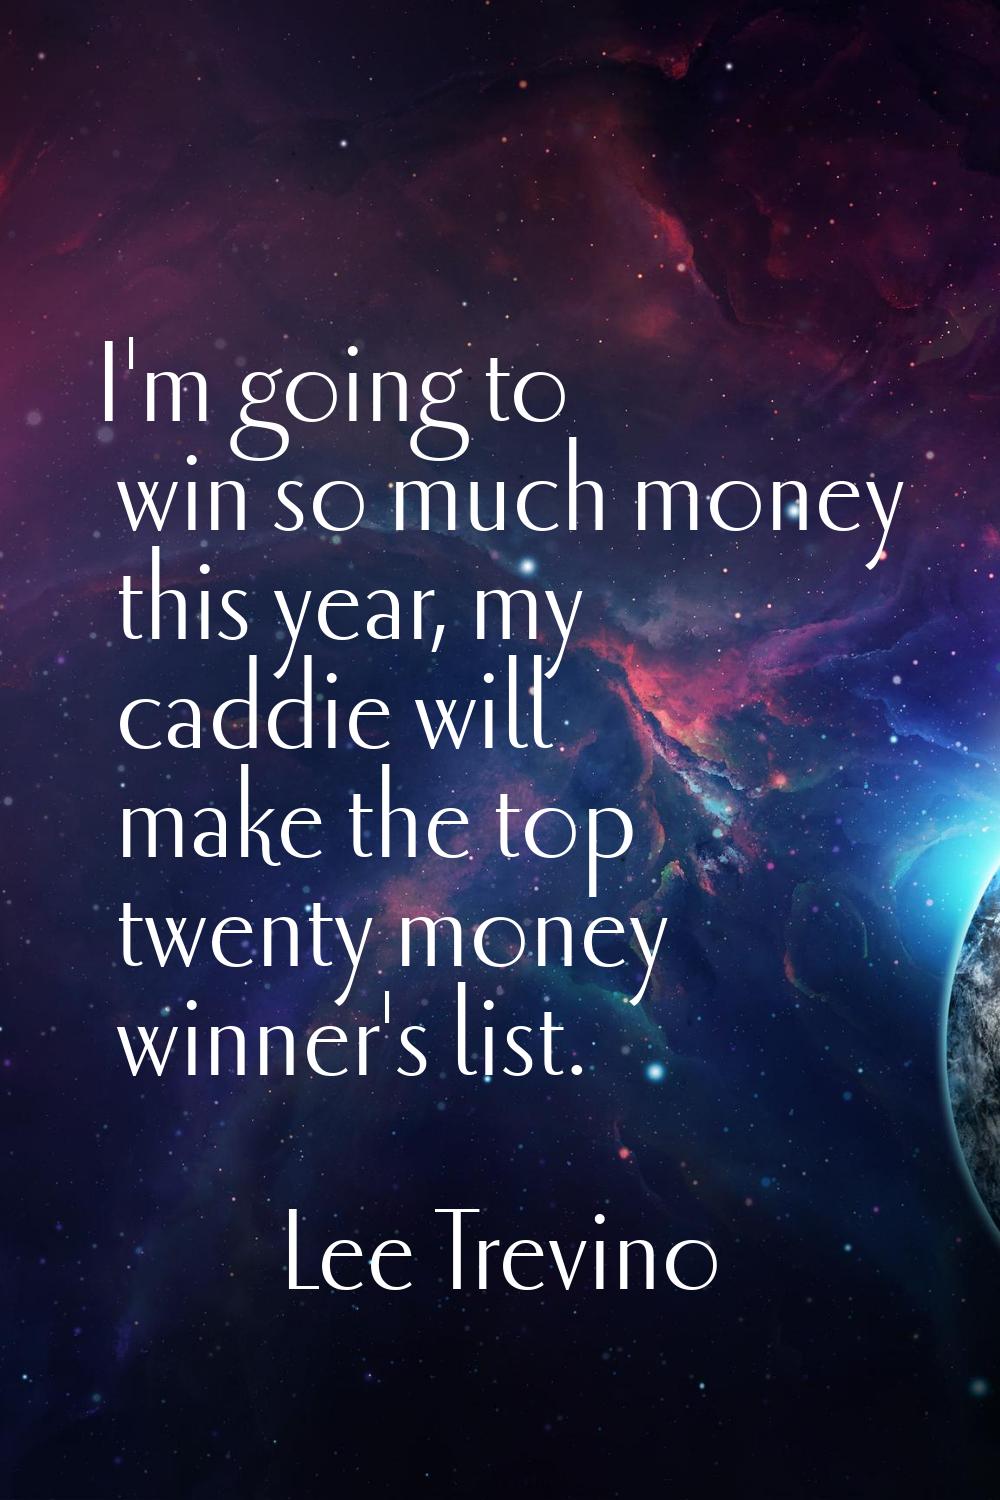 I'm going to win so much money this year, my caddie will make the top twenty money winner's list.